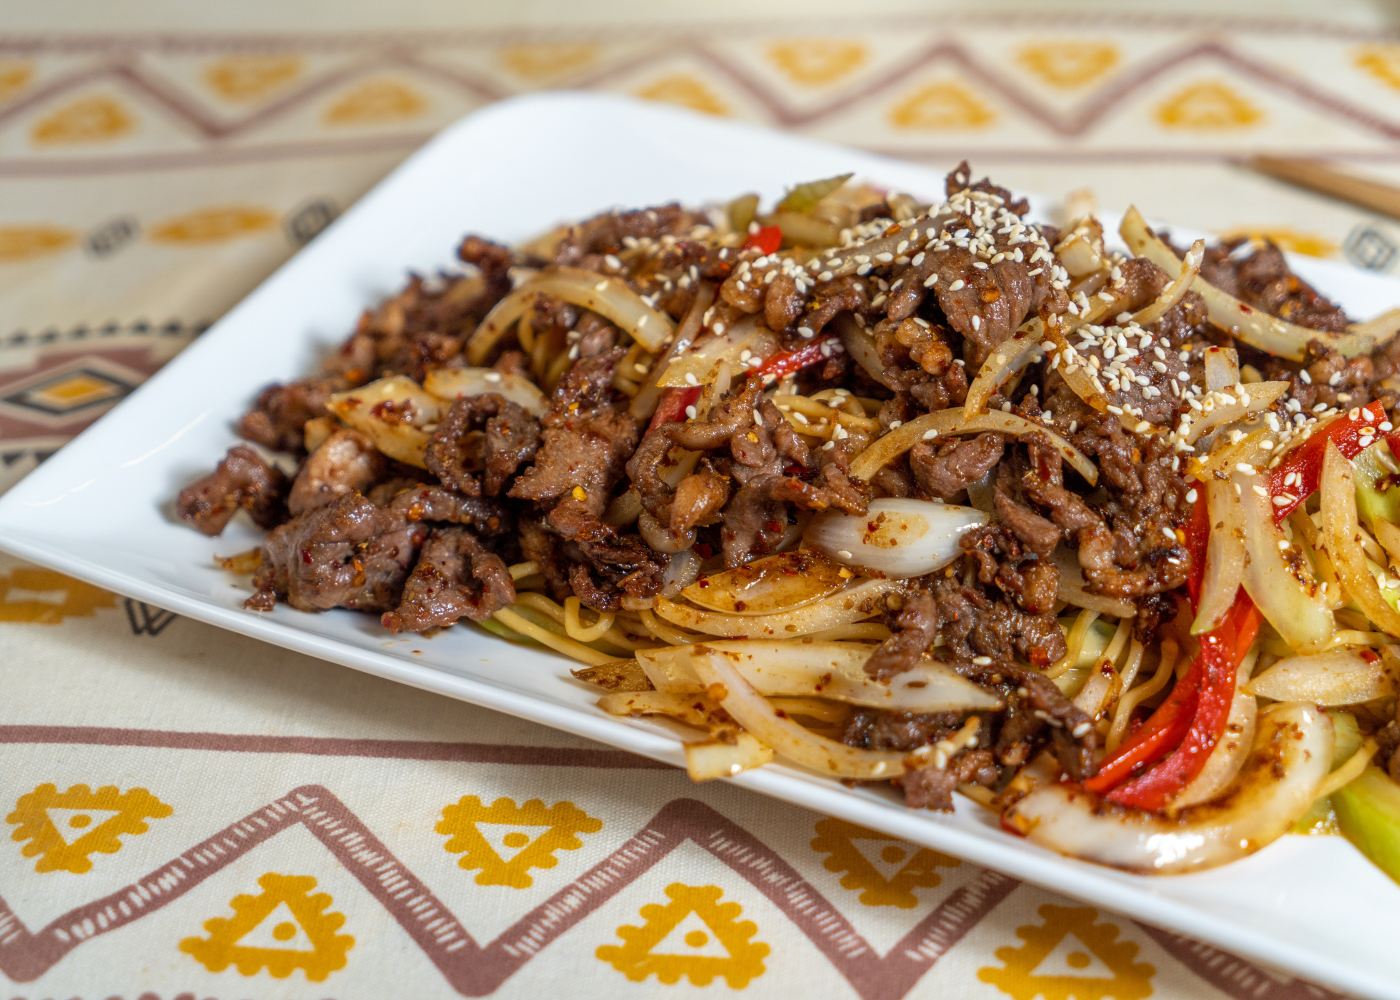 Halal street Hot Pot & Xinjiang Cuisine 新疆菜 良湯火鍋 - Newark